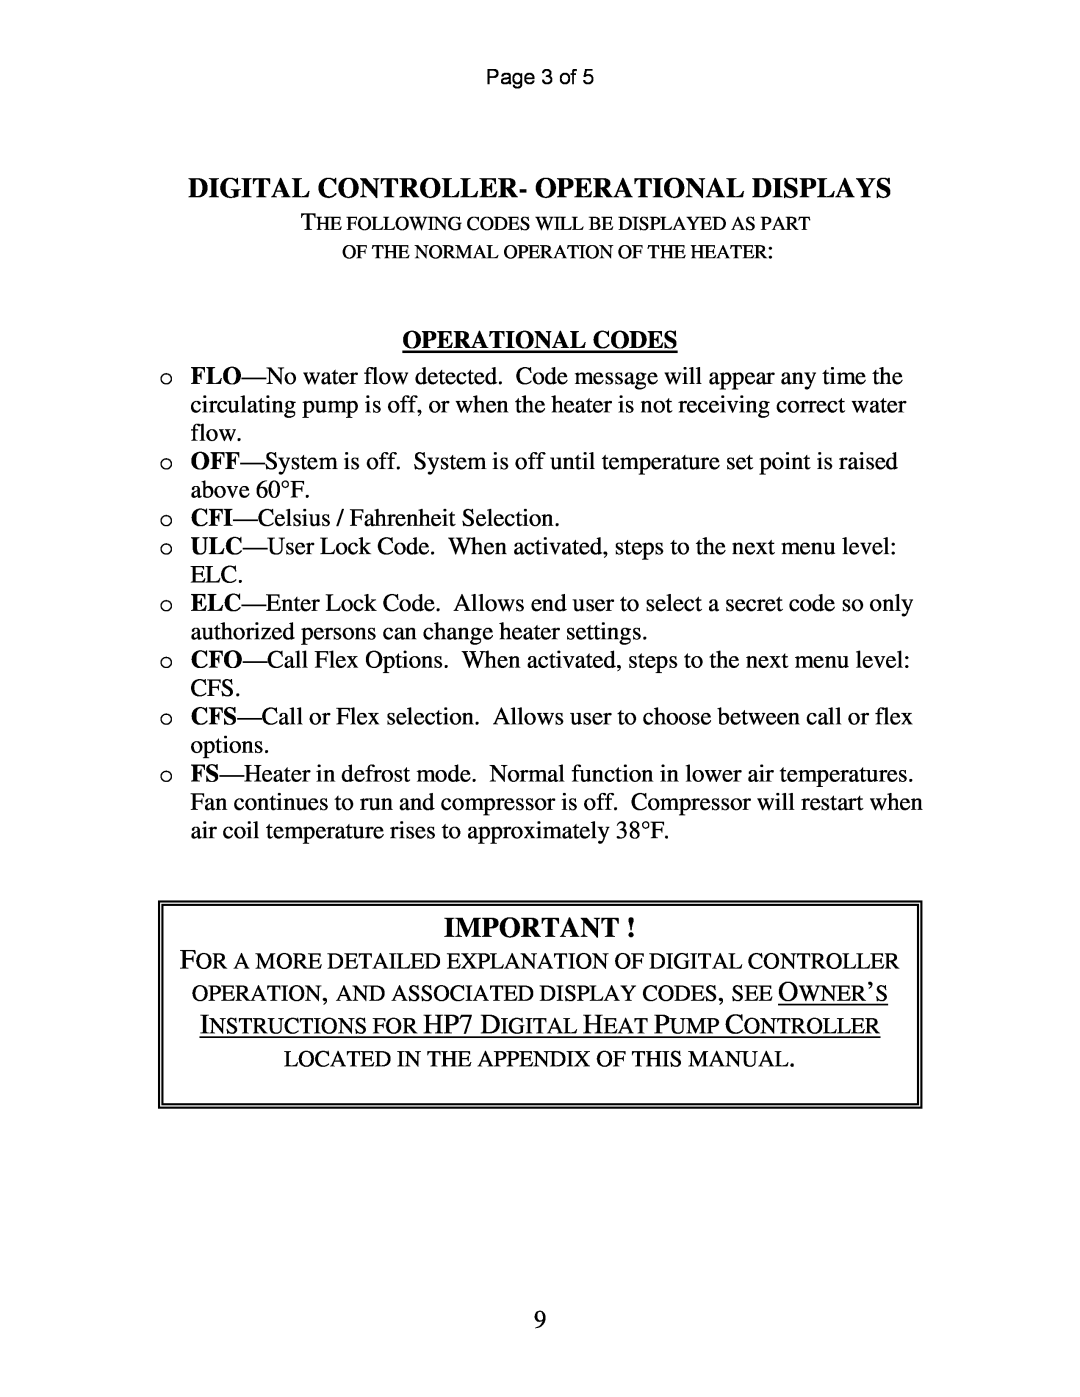 Aquacal 120, 155 owner manual Digital Controller- Operational Displays, Operational Codes 